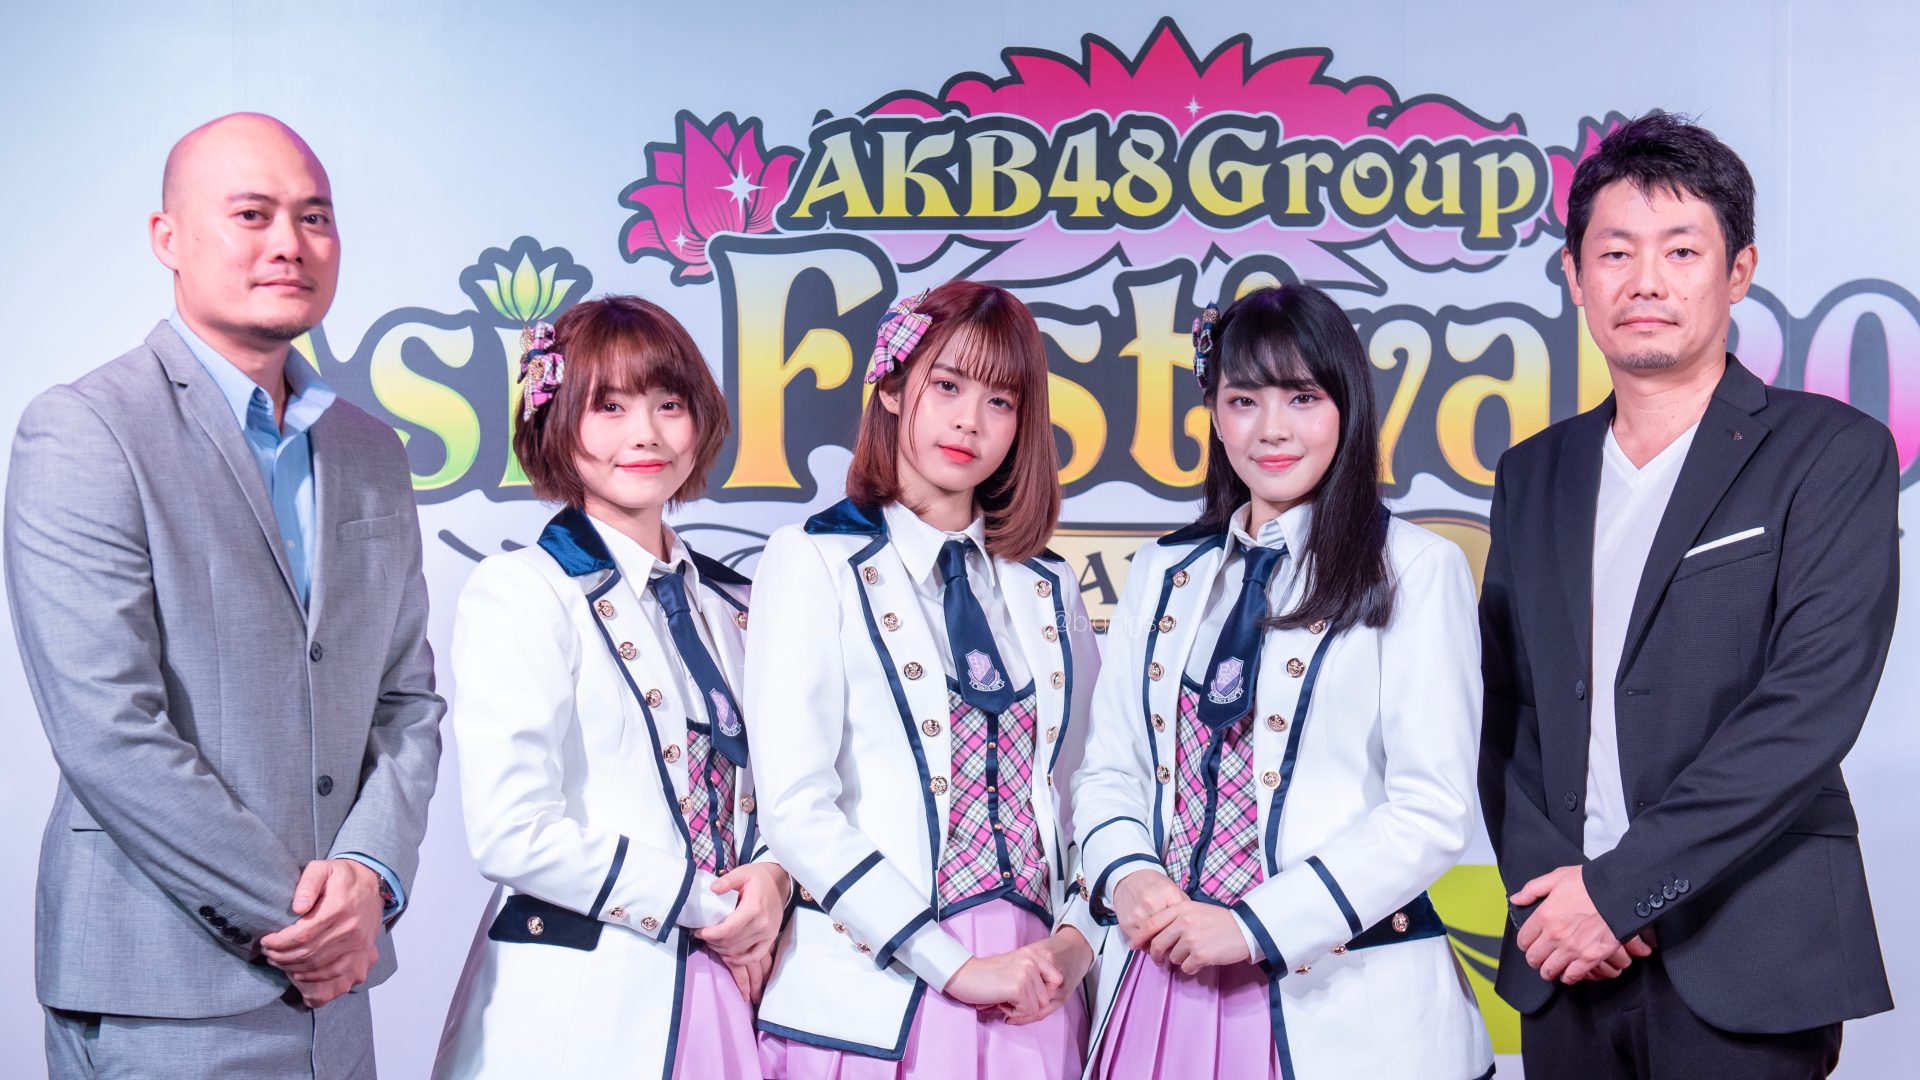 AKB Group จัดใหญ่ AKB48 GROUP ASIA FESTIVAL 2019